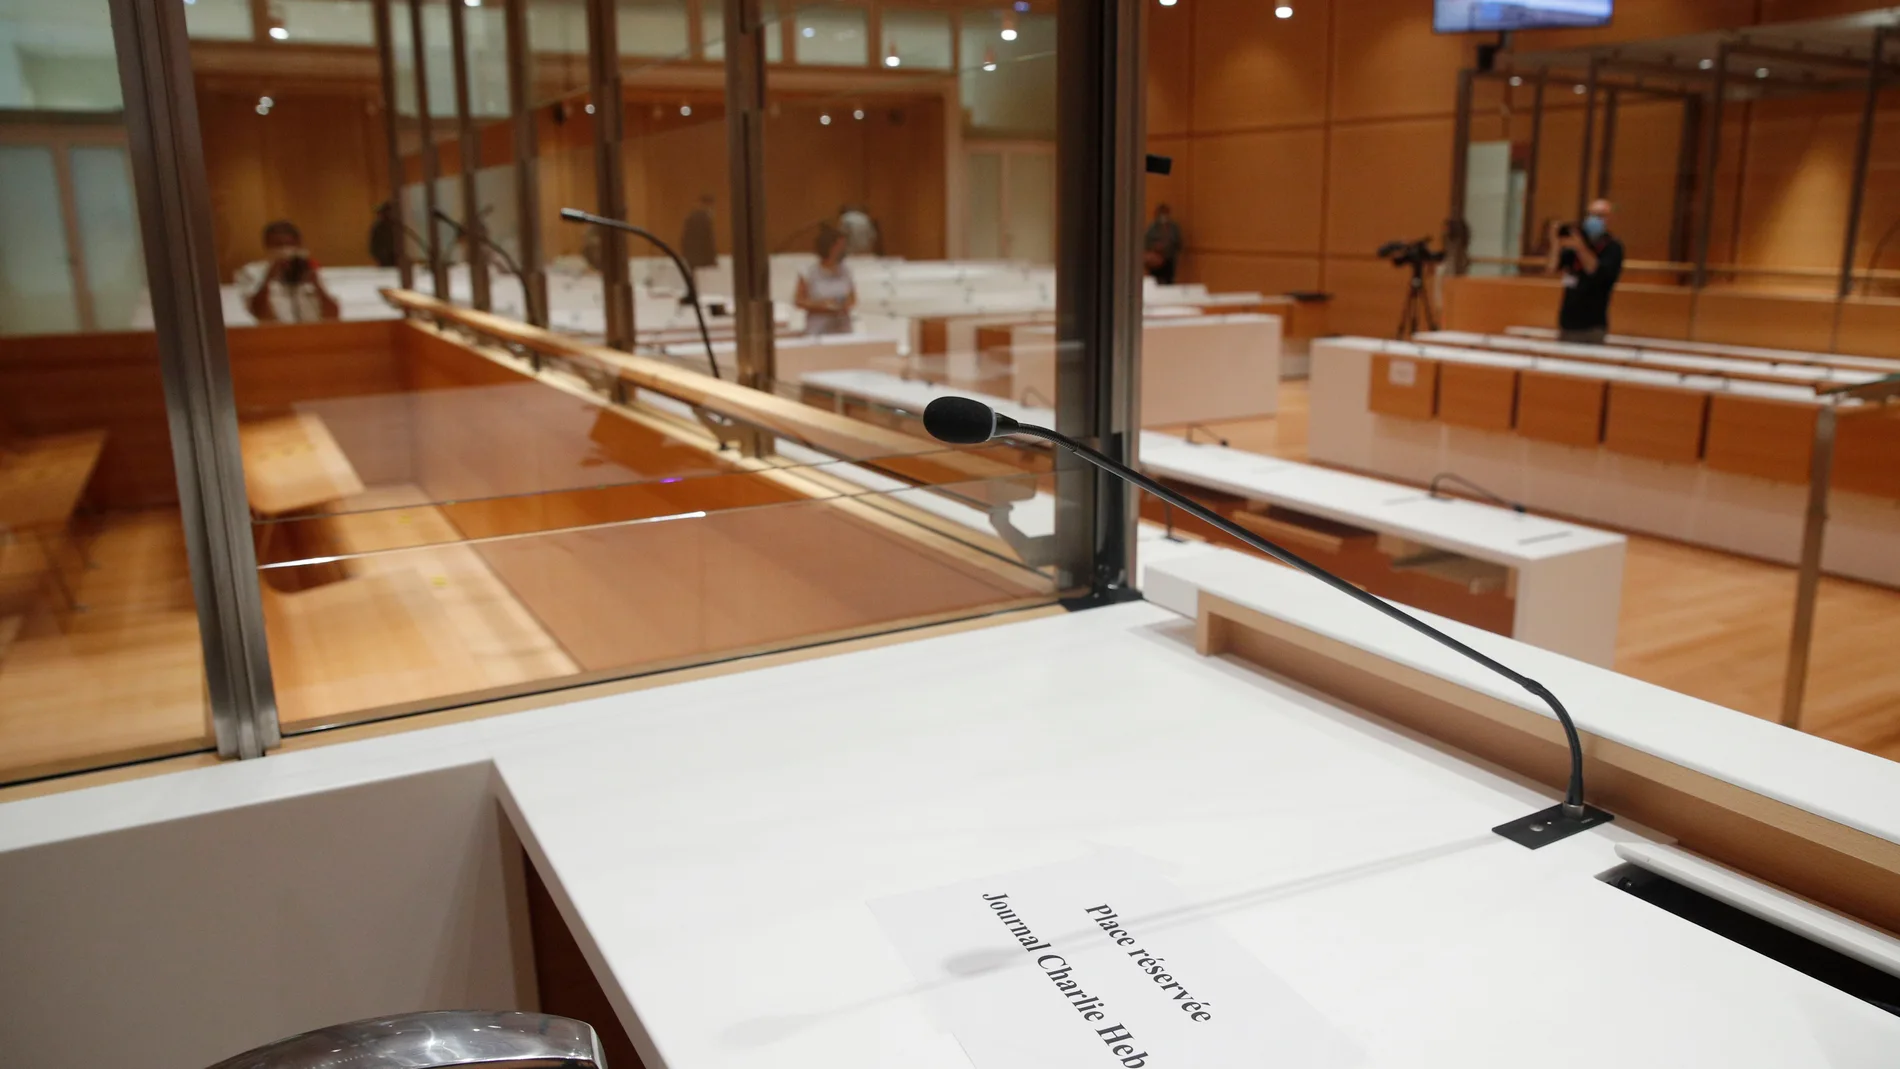 Courtroom for Charlie Hebdo terror attack trial in Paris